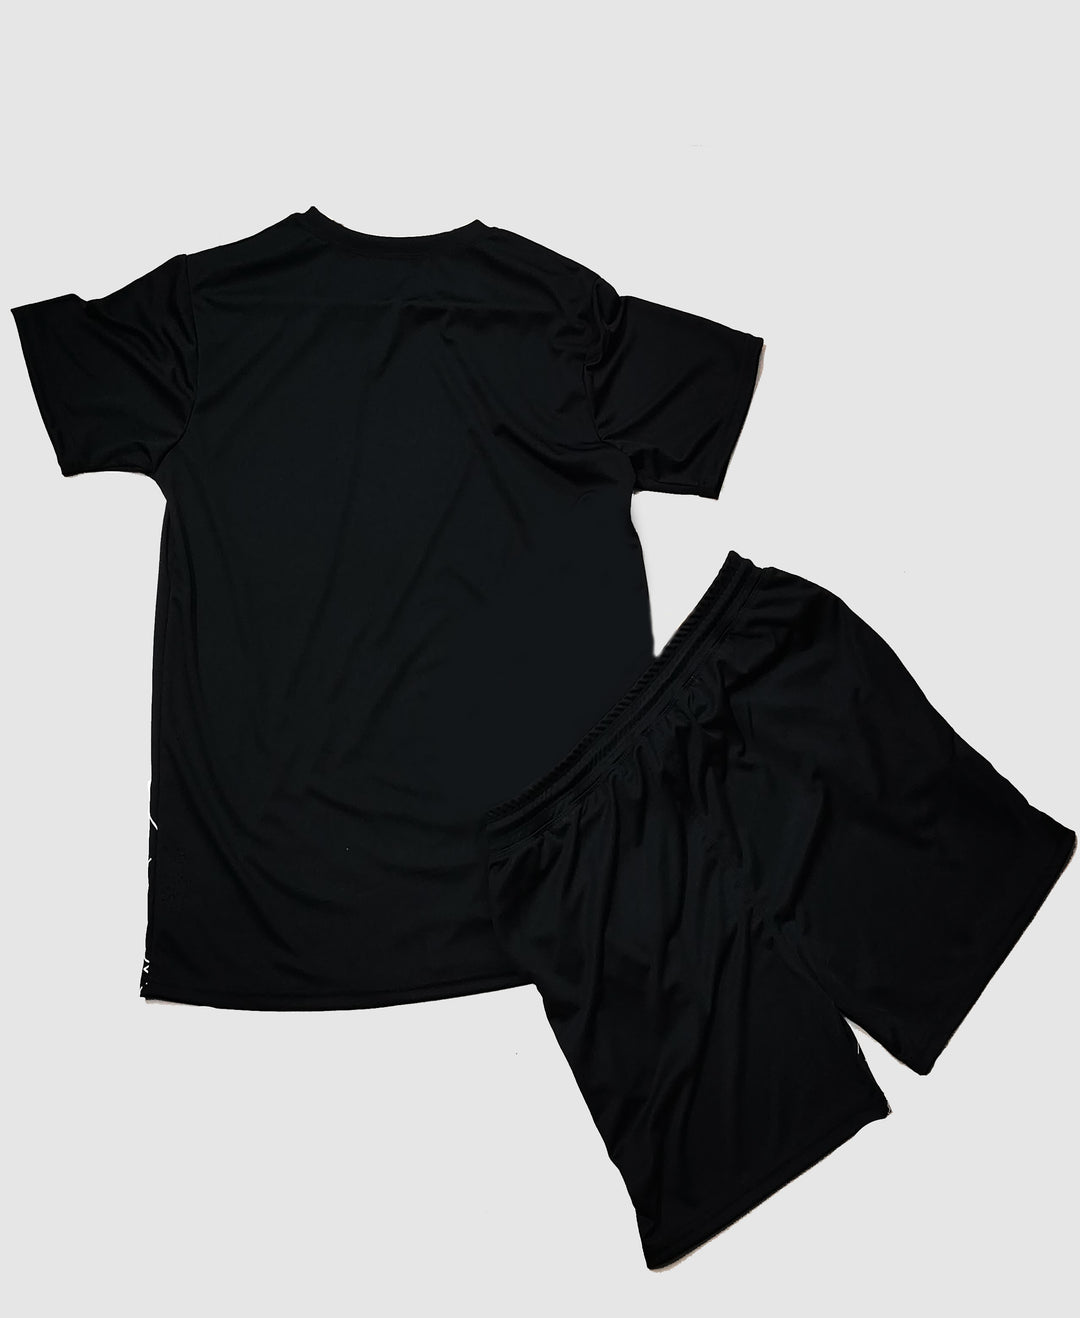 Printed Men Co-ords Track Suit (Black)